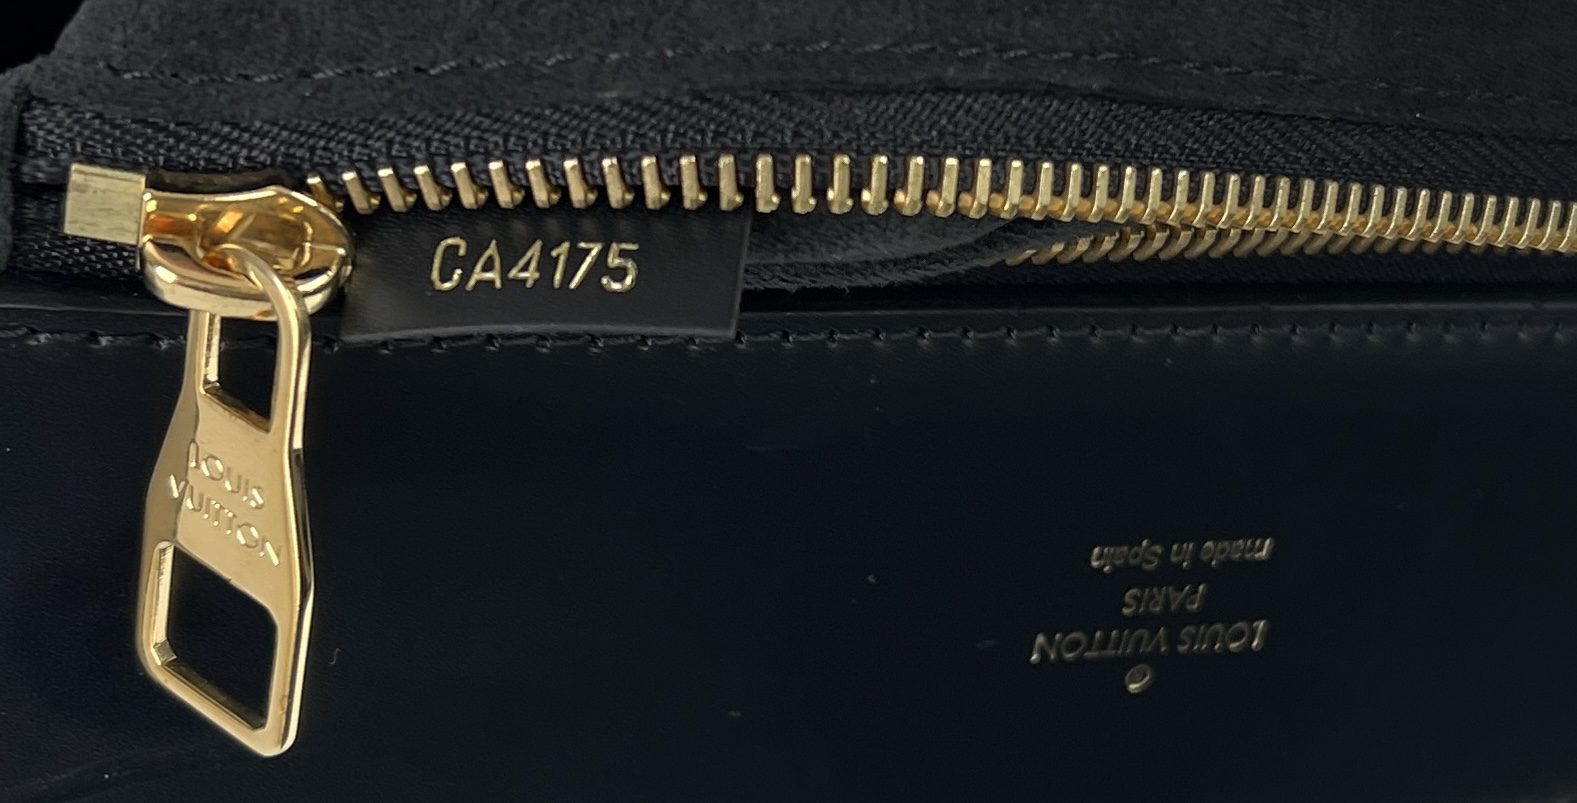 Phenix MM Monogram Canvas and Calfskin Leather Tote Bag – Poshbag Boutique